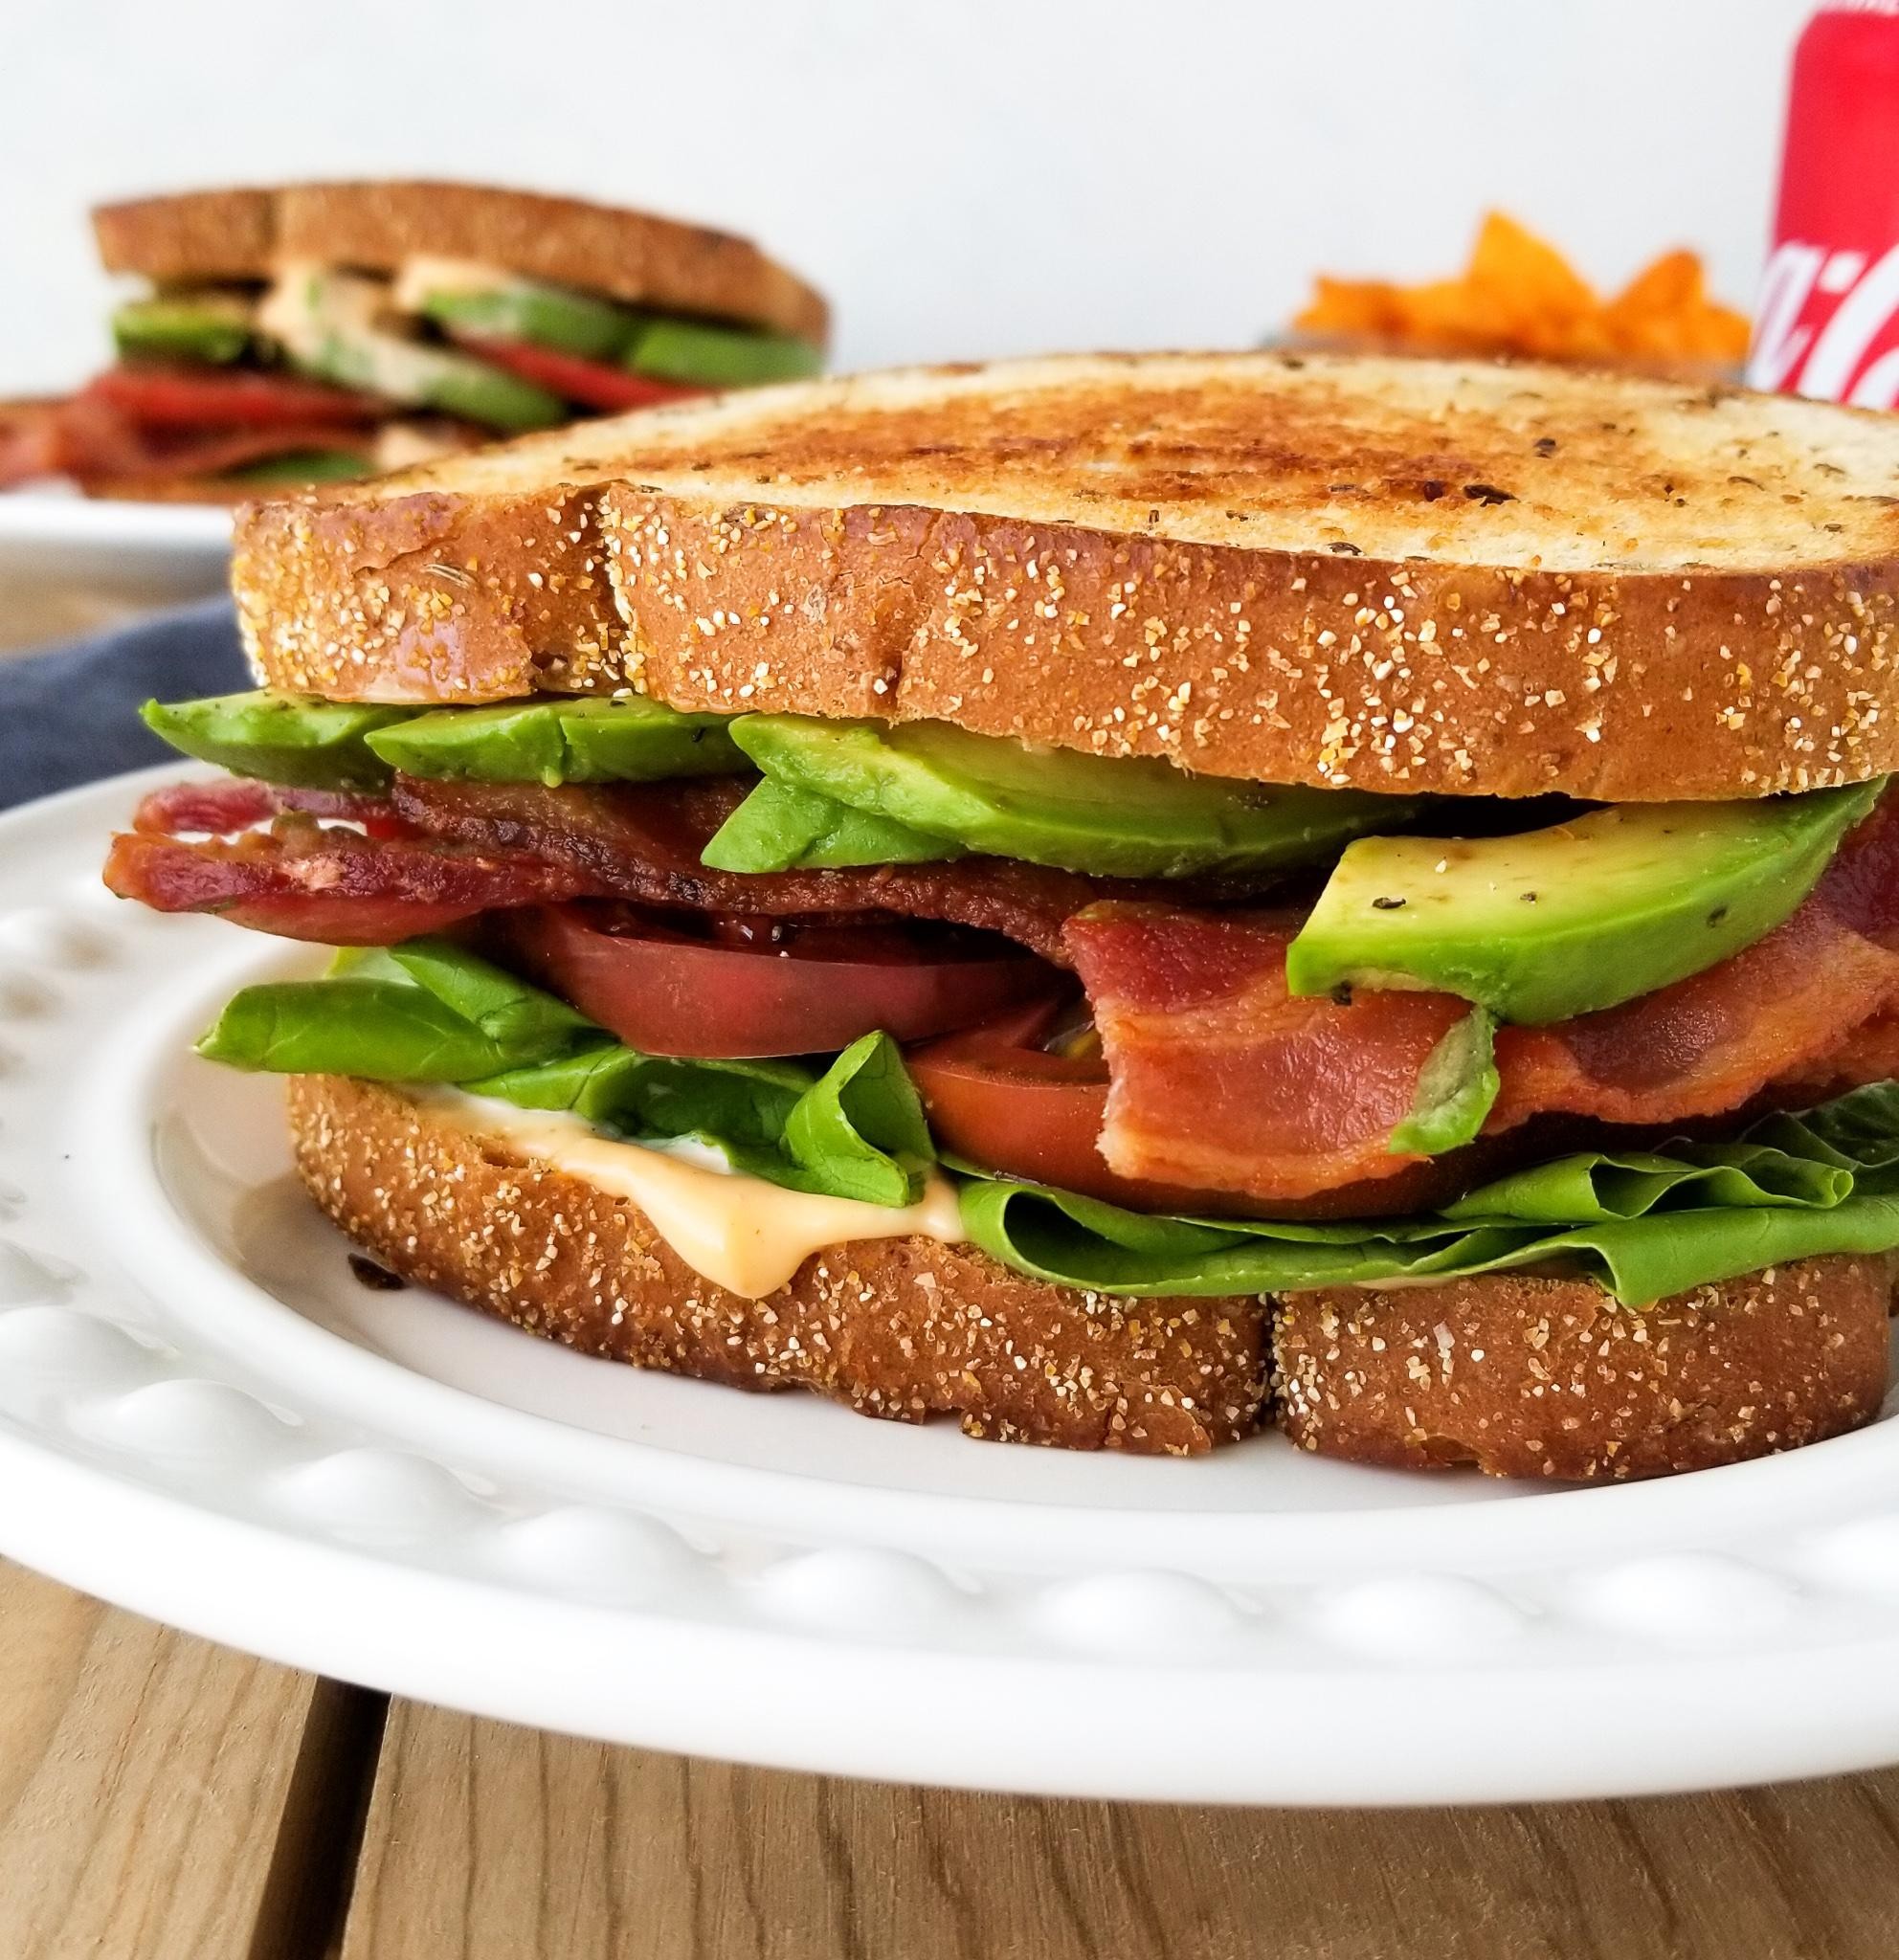 BLTA sandwich